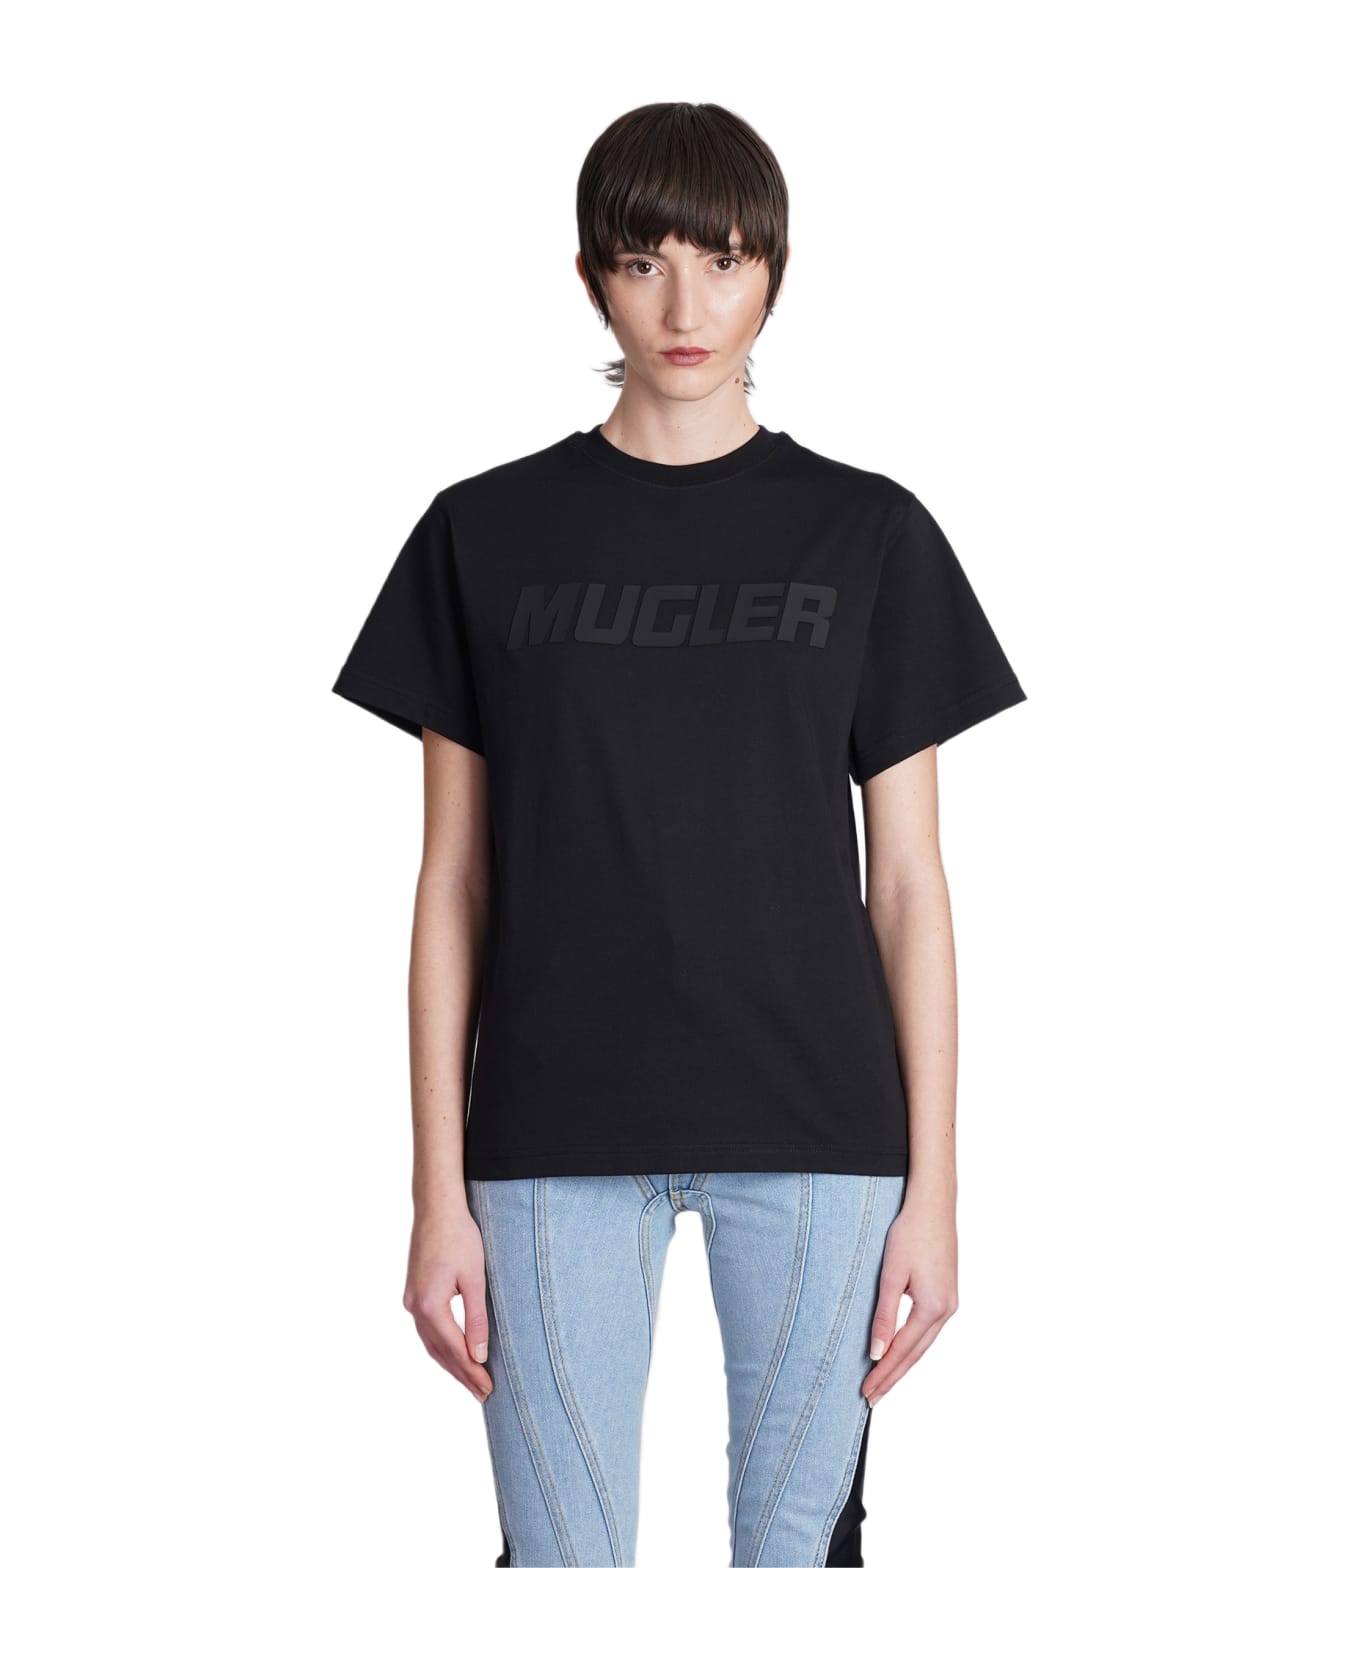 Mugler T-shirt In Black Cotton - black Tシャツ